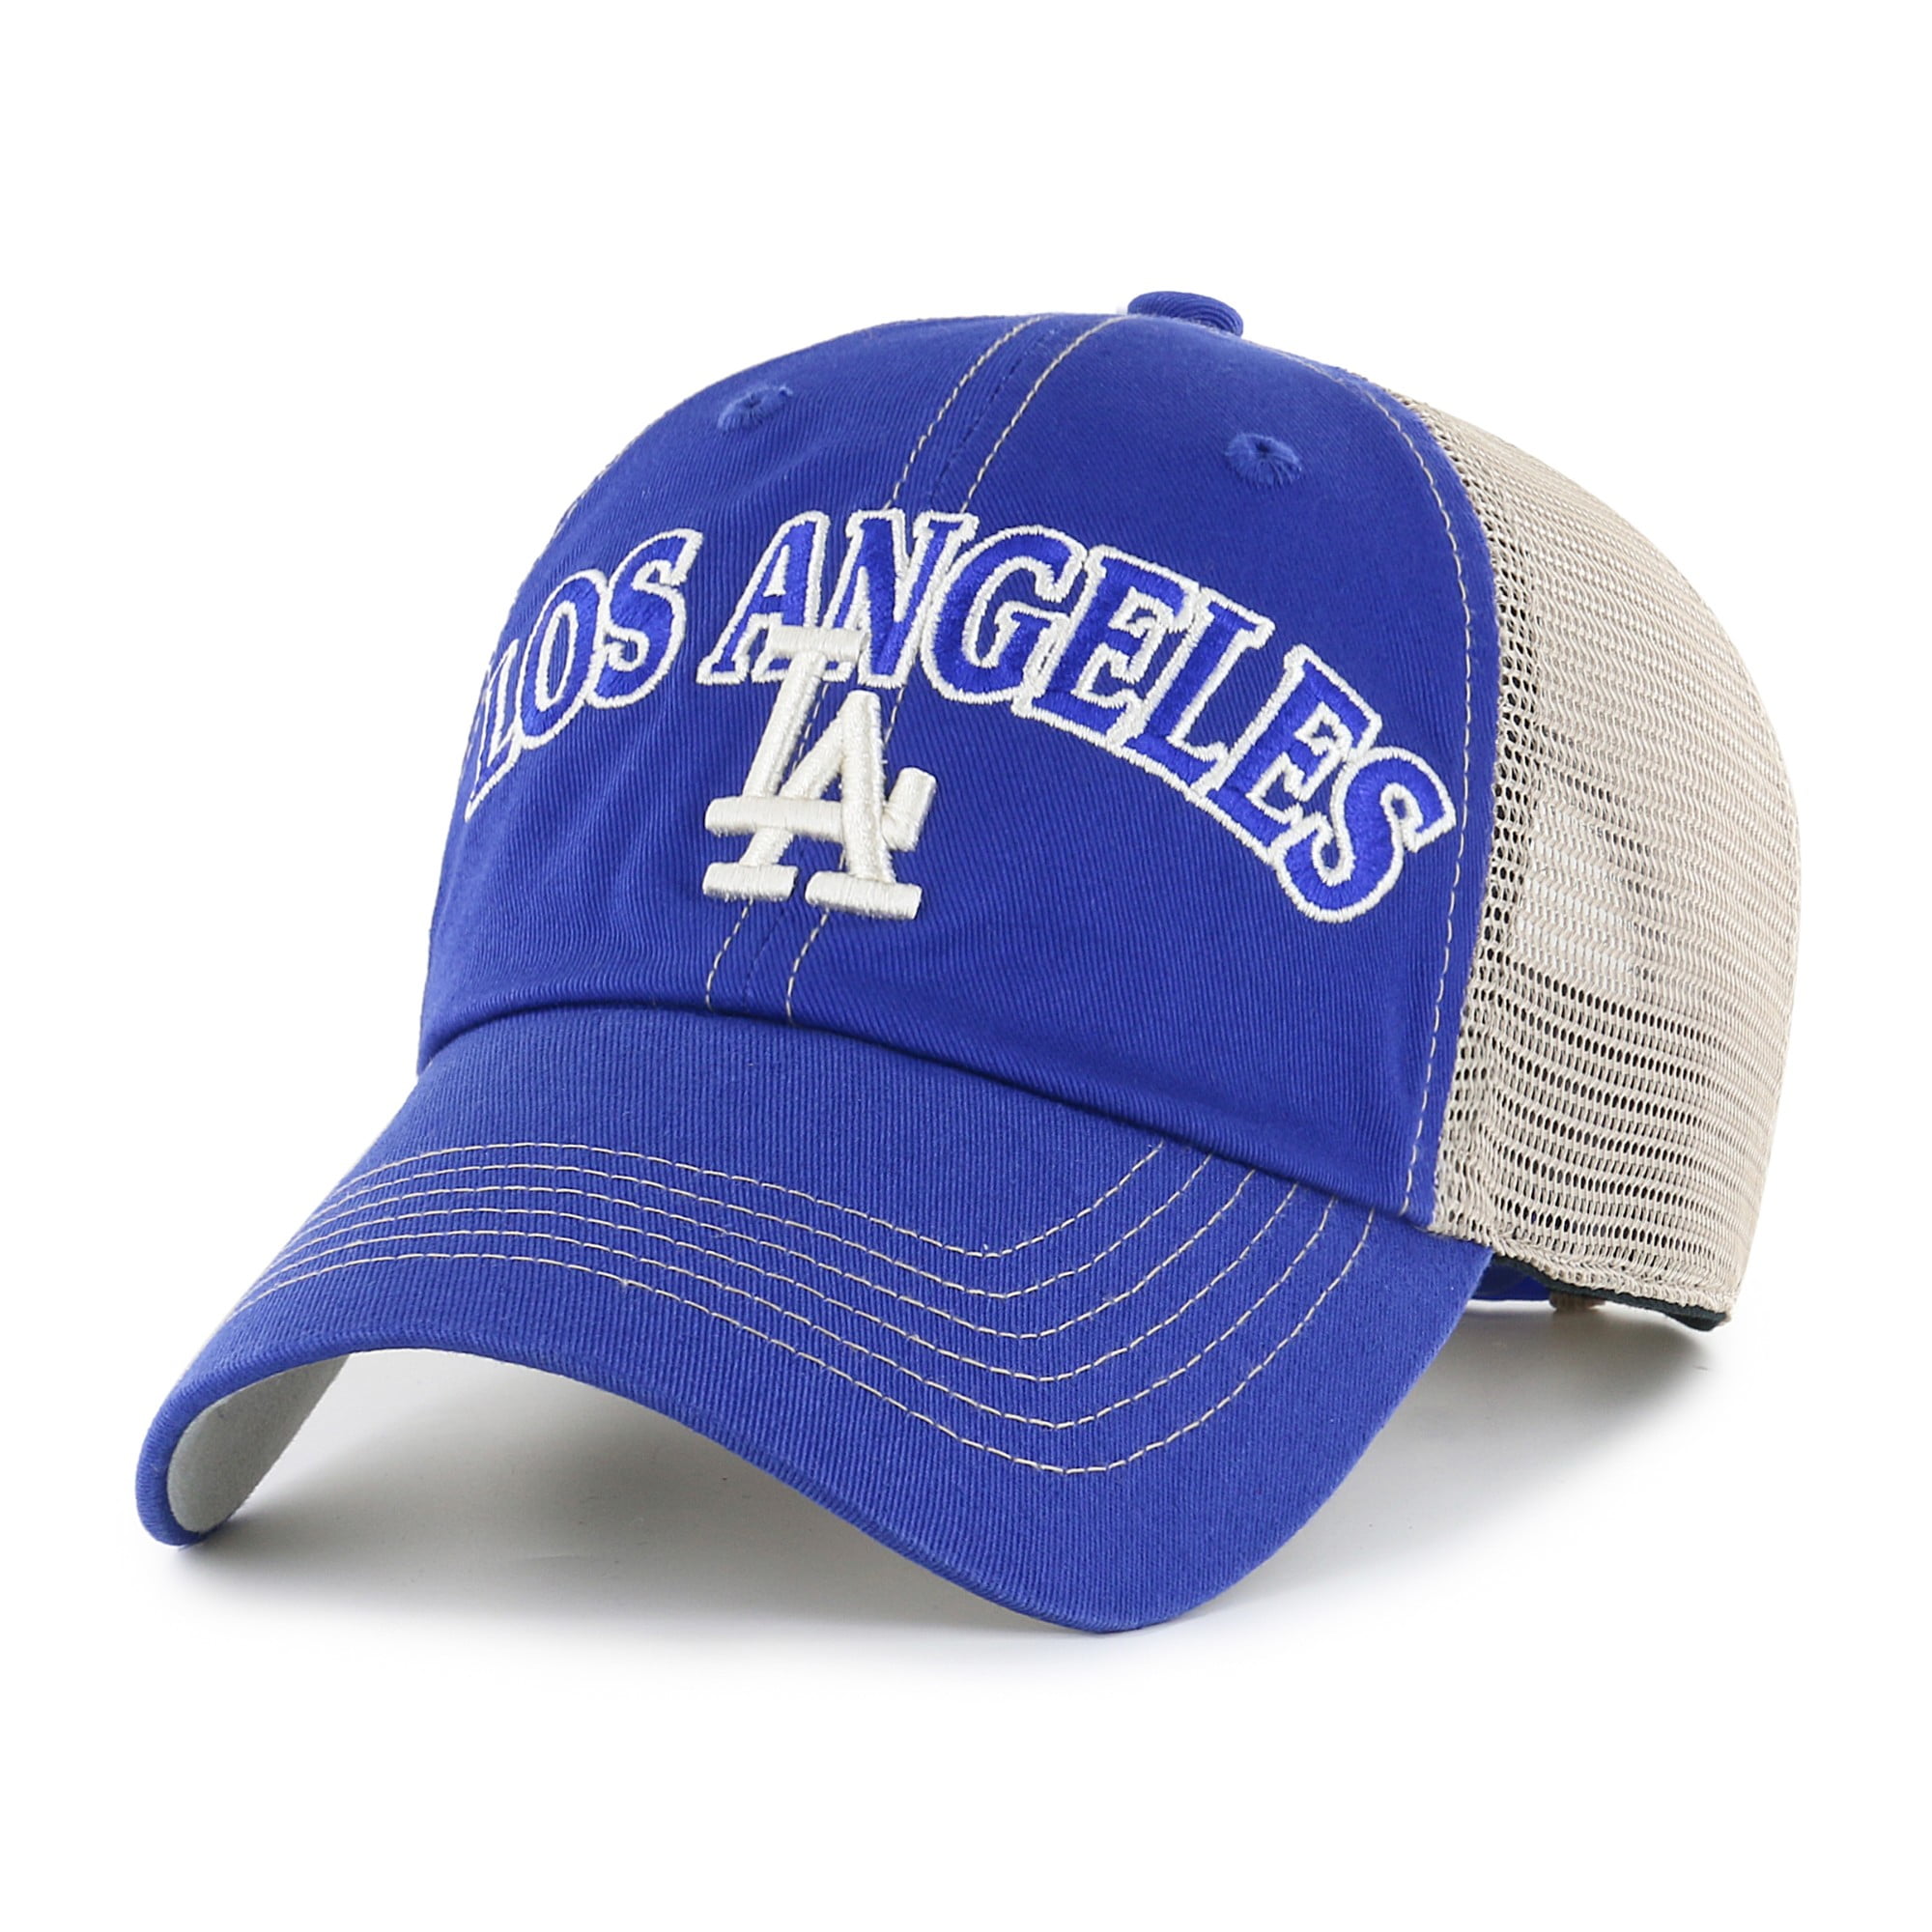 MLB Los Angeles Dodgers Alquippa Adjustable Cap/Hat by Fan Favorite 